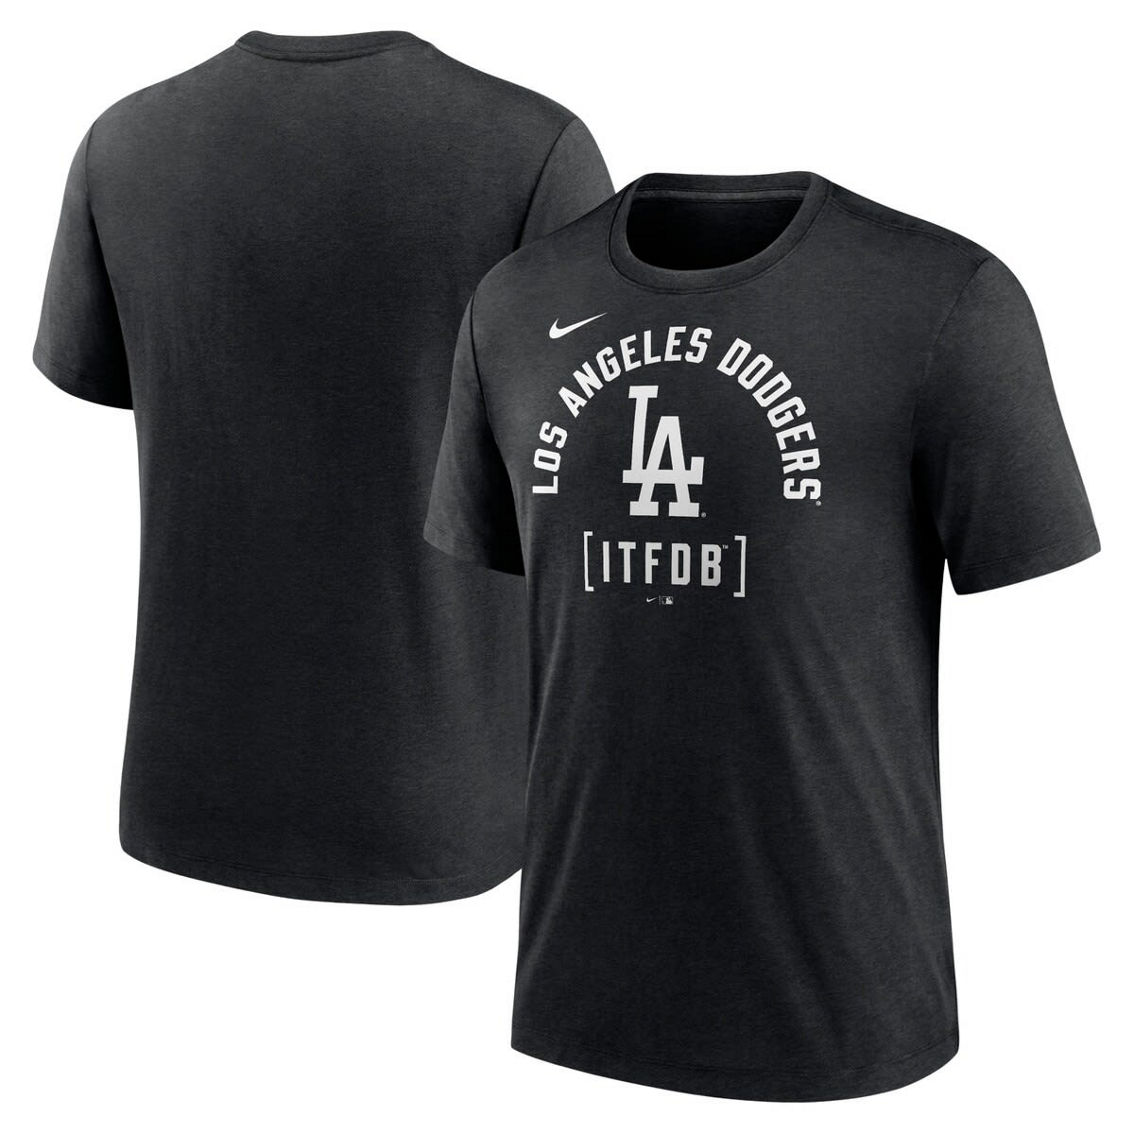 Nike Men's Heather Black Los Angeles Dodgers Swing Big Tri-Blend T-Shirt - Image 2 of 4